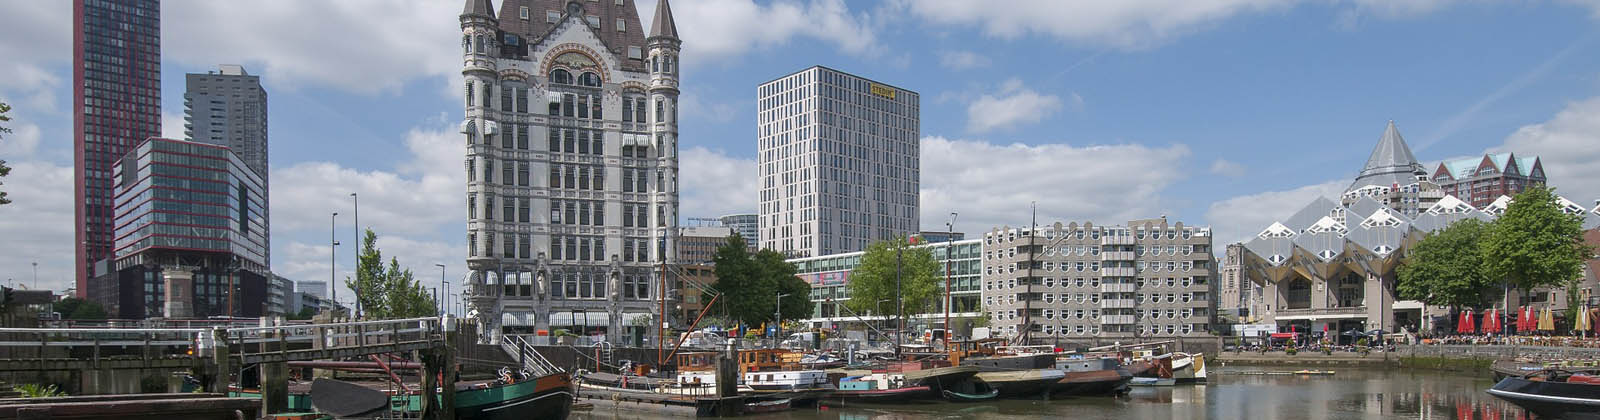 DMC-Rotterdam-travel-agency